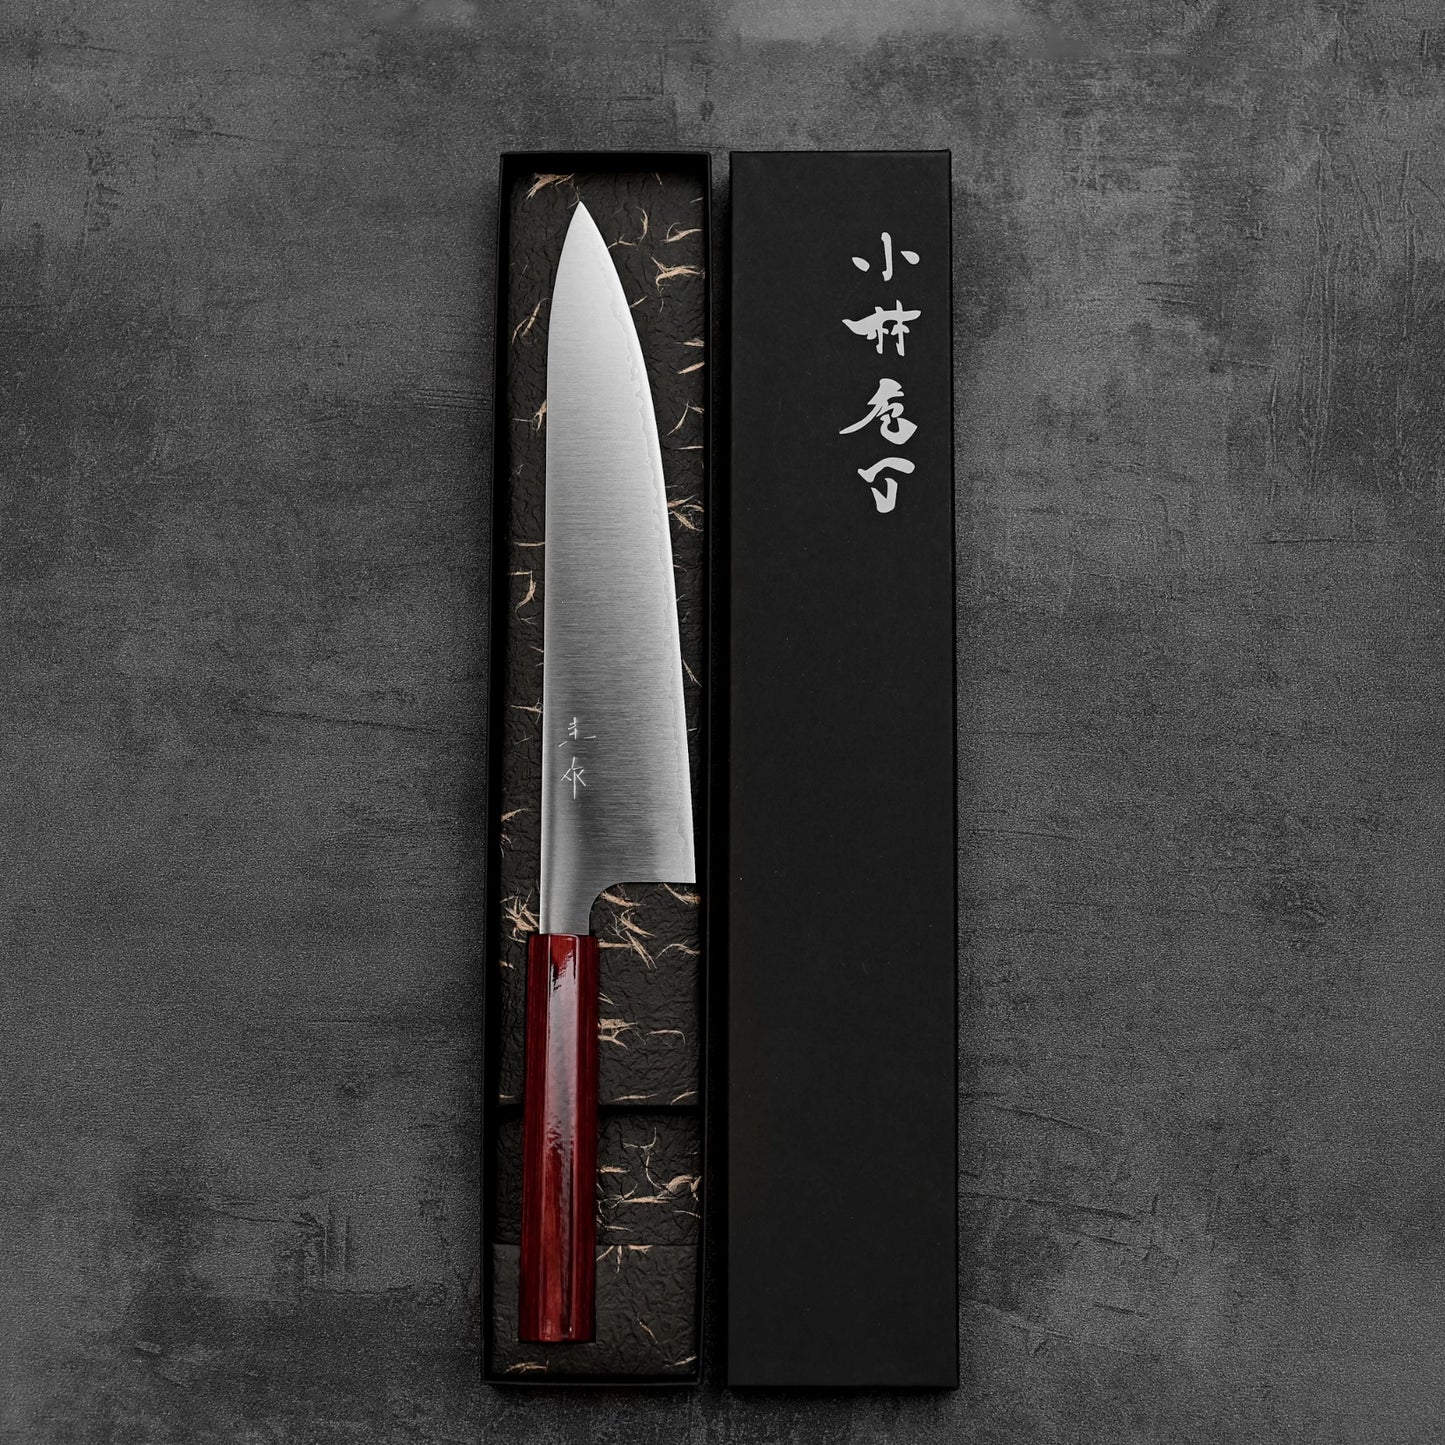 Top down view of Kei Kobayashi SG2 gyuto knife in its box